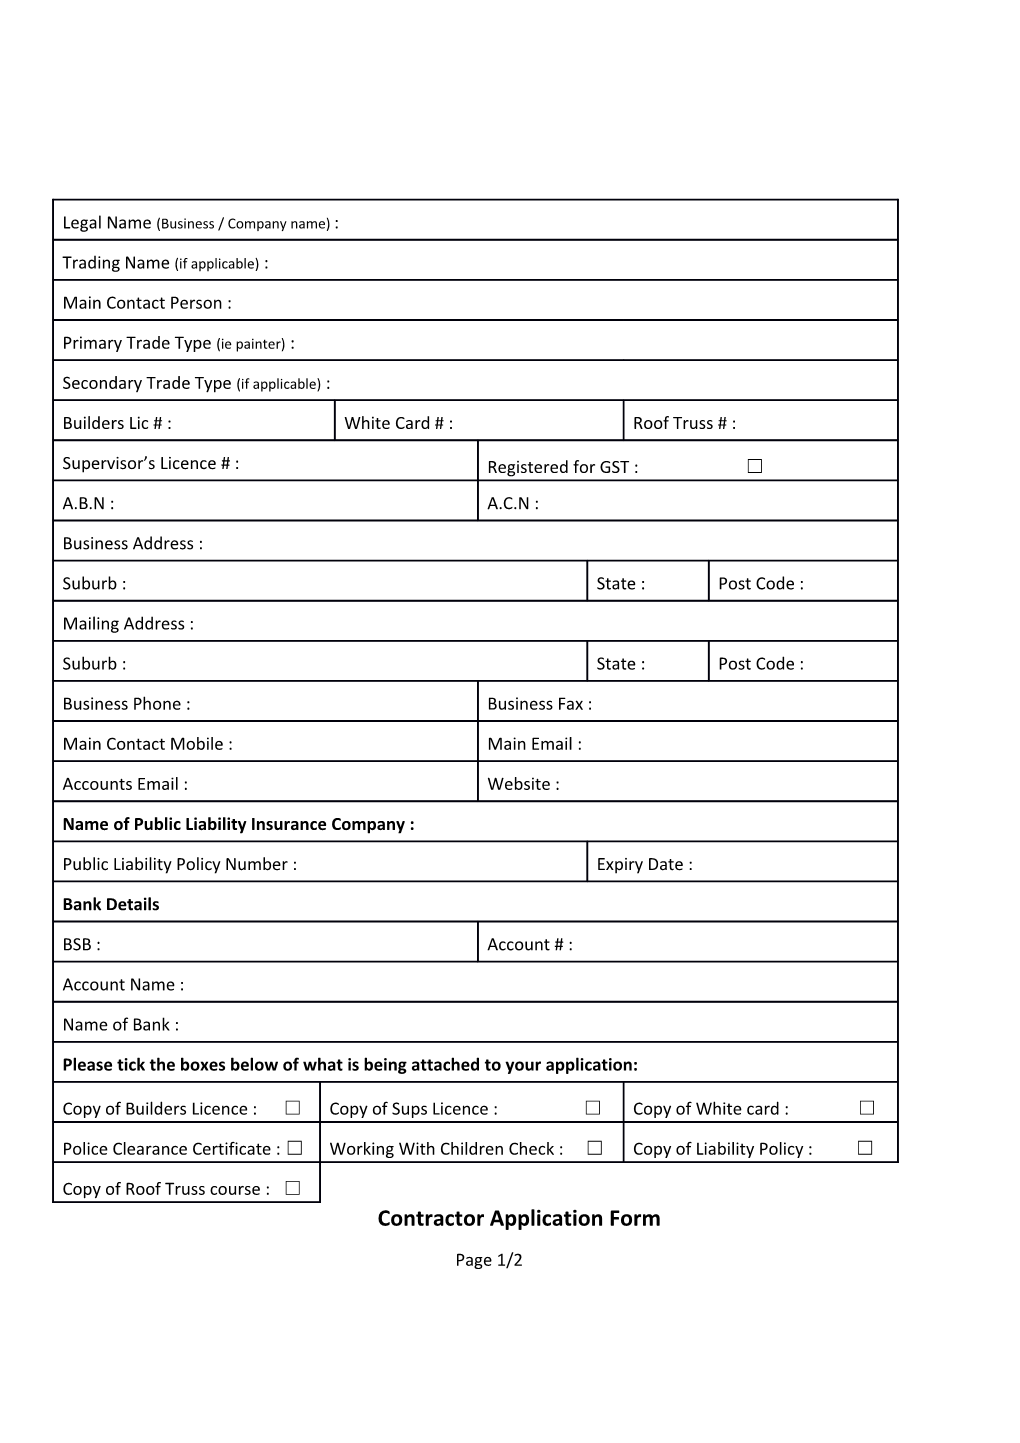 Contractor Application Form